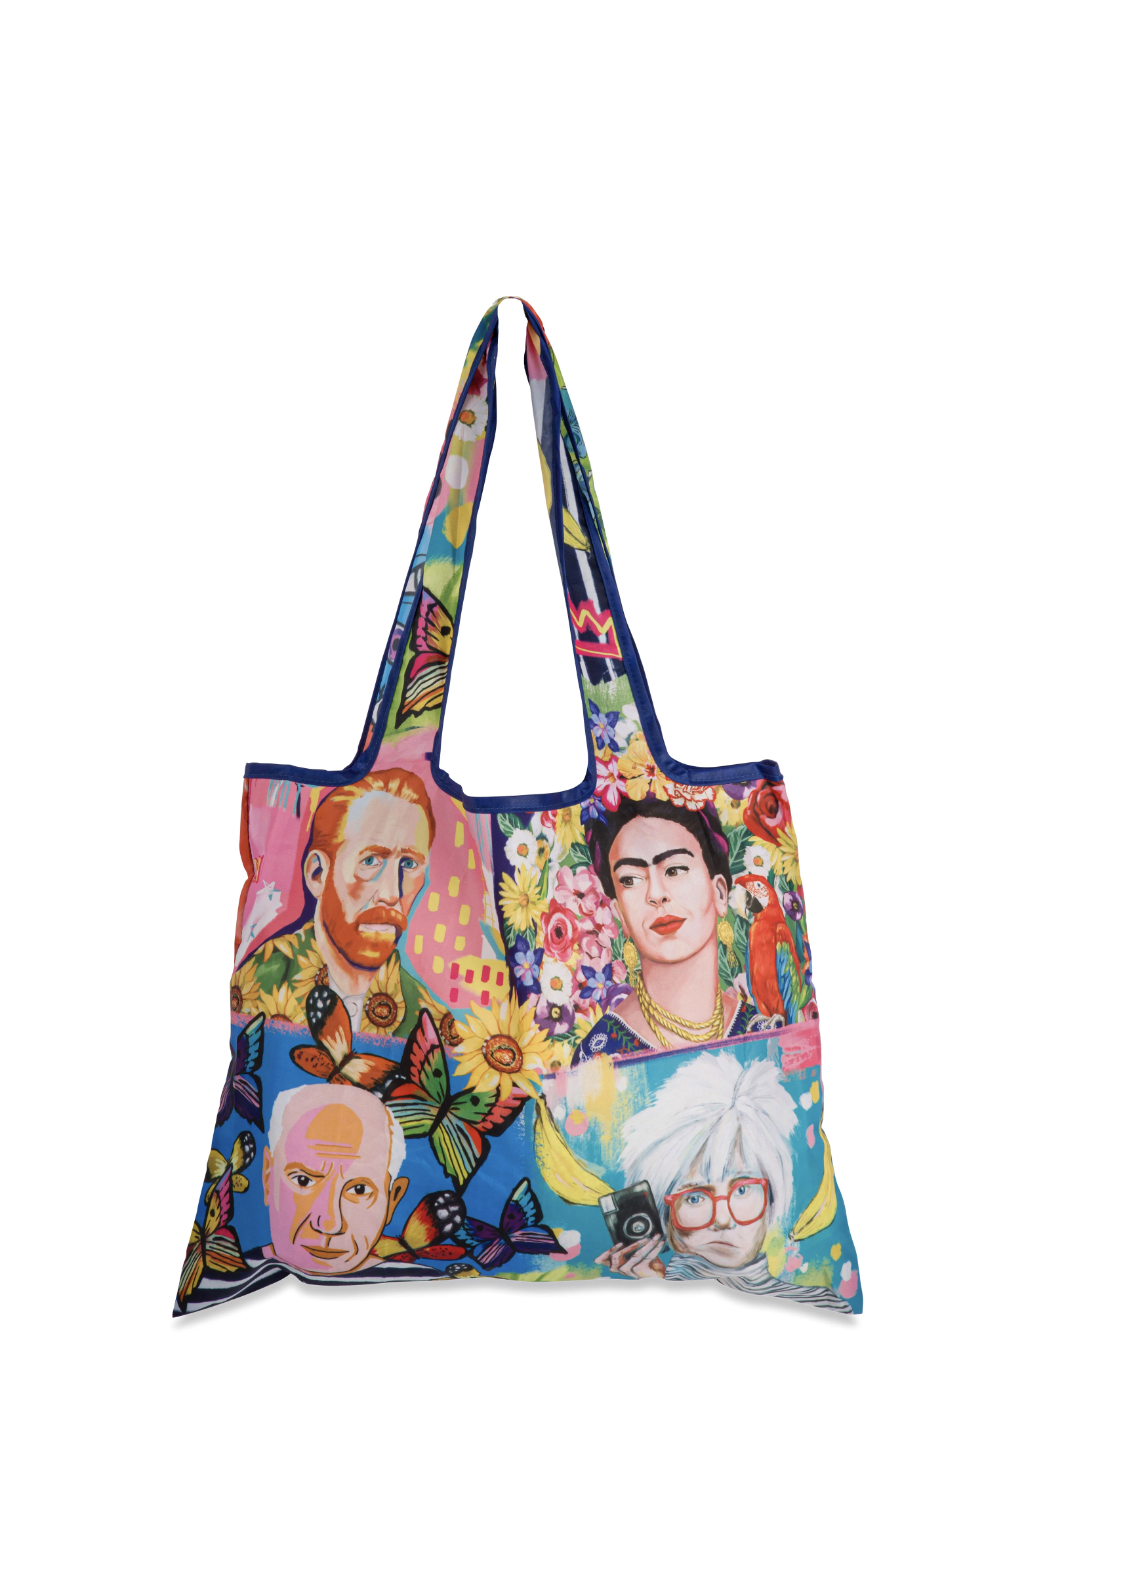 Foldable Shopper Bag Tribute Artists